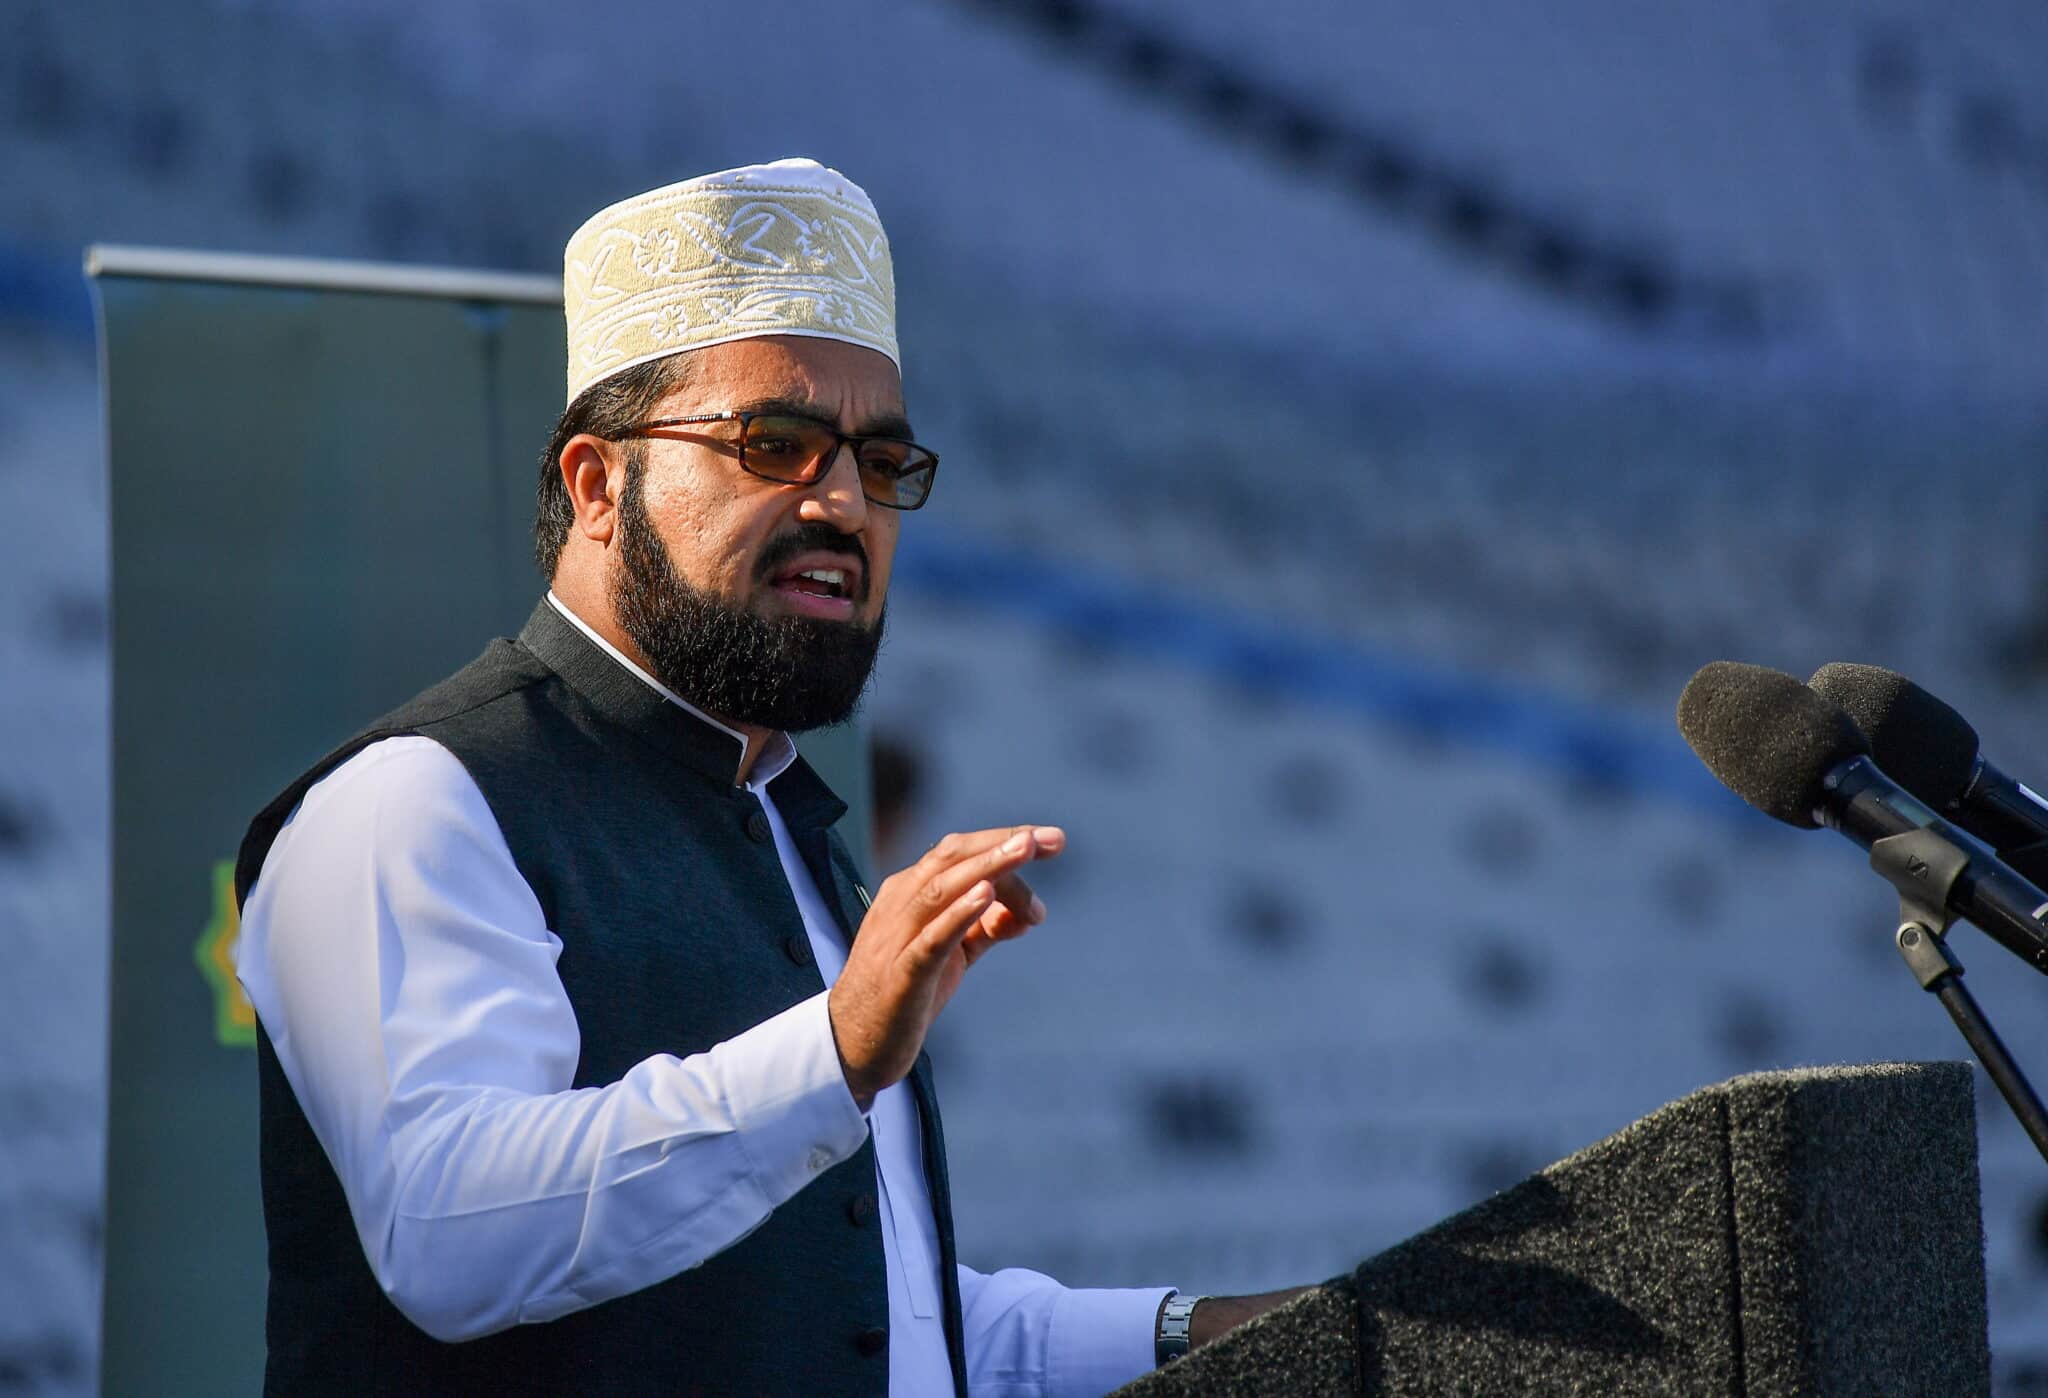 Shaykh Dr Umar Al-Qadri from Blanchardstown mosque, who led the Eid prayers, during the celebration of Eid Al-Adha at Croke Park in Dublin. 